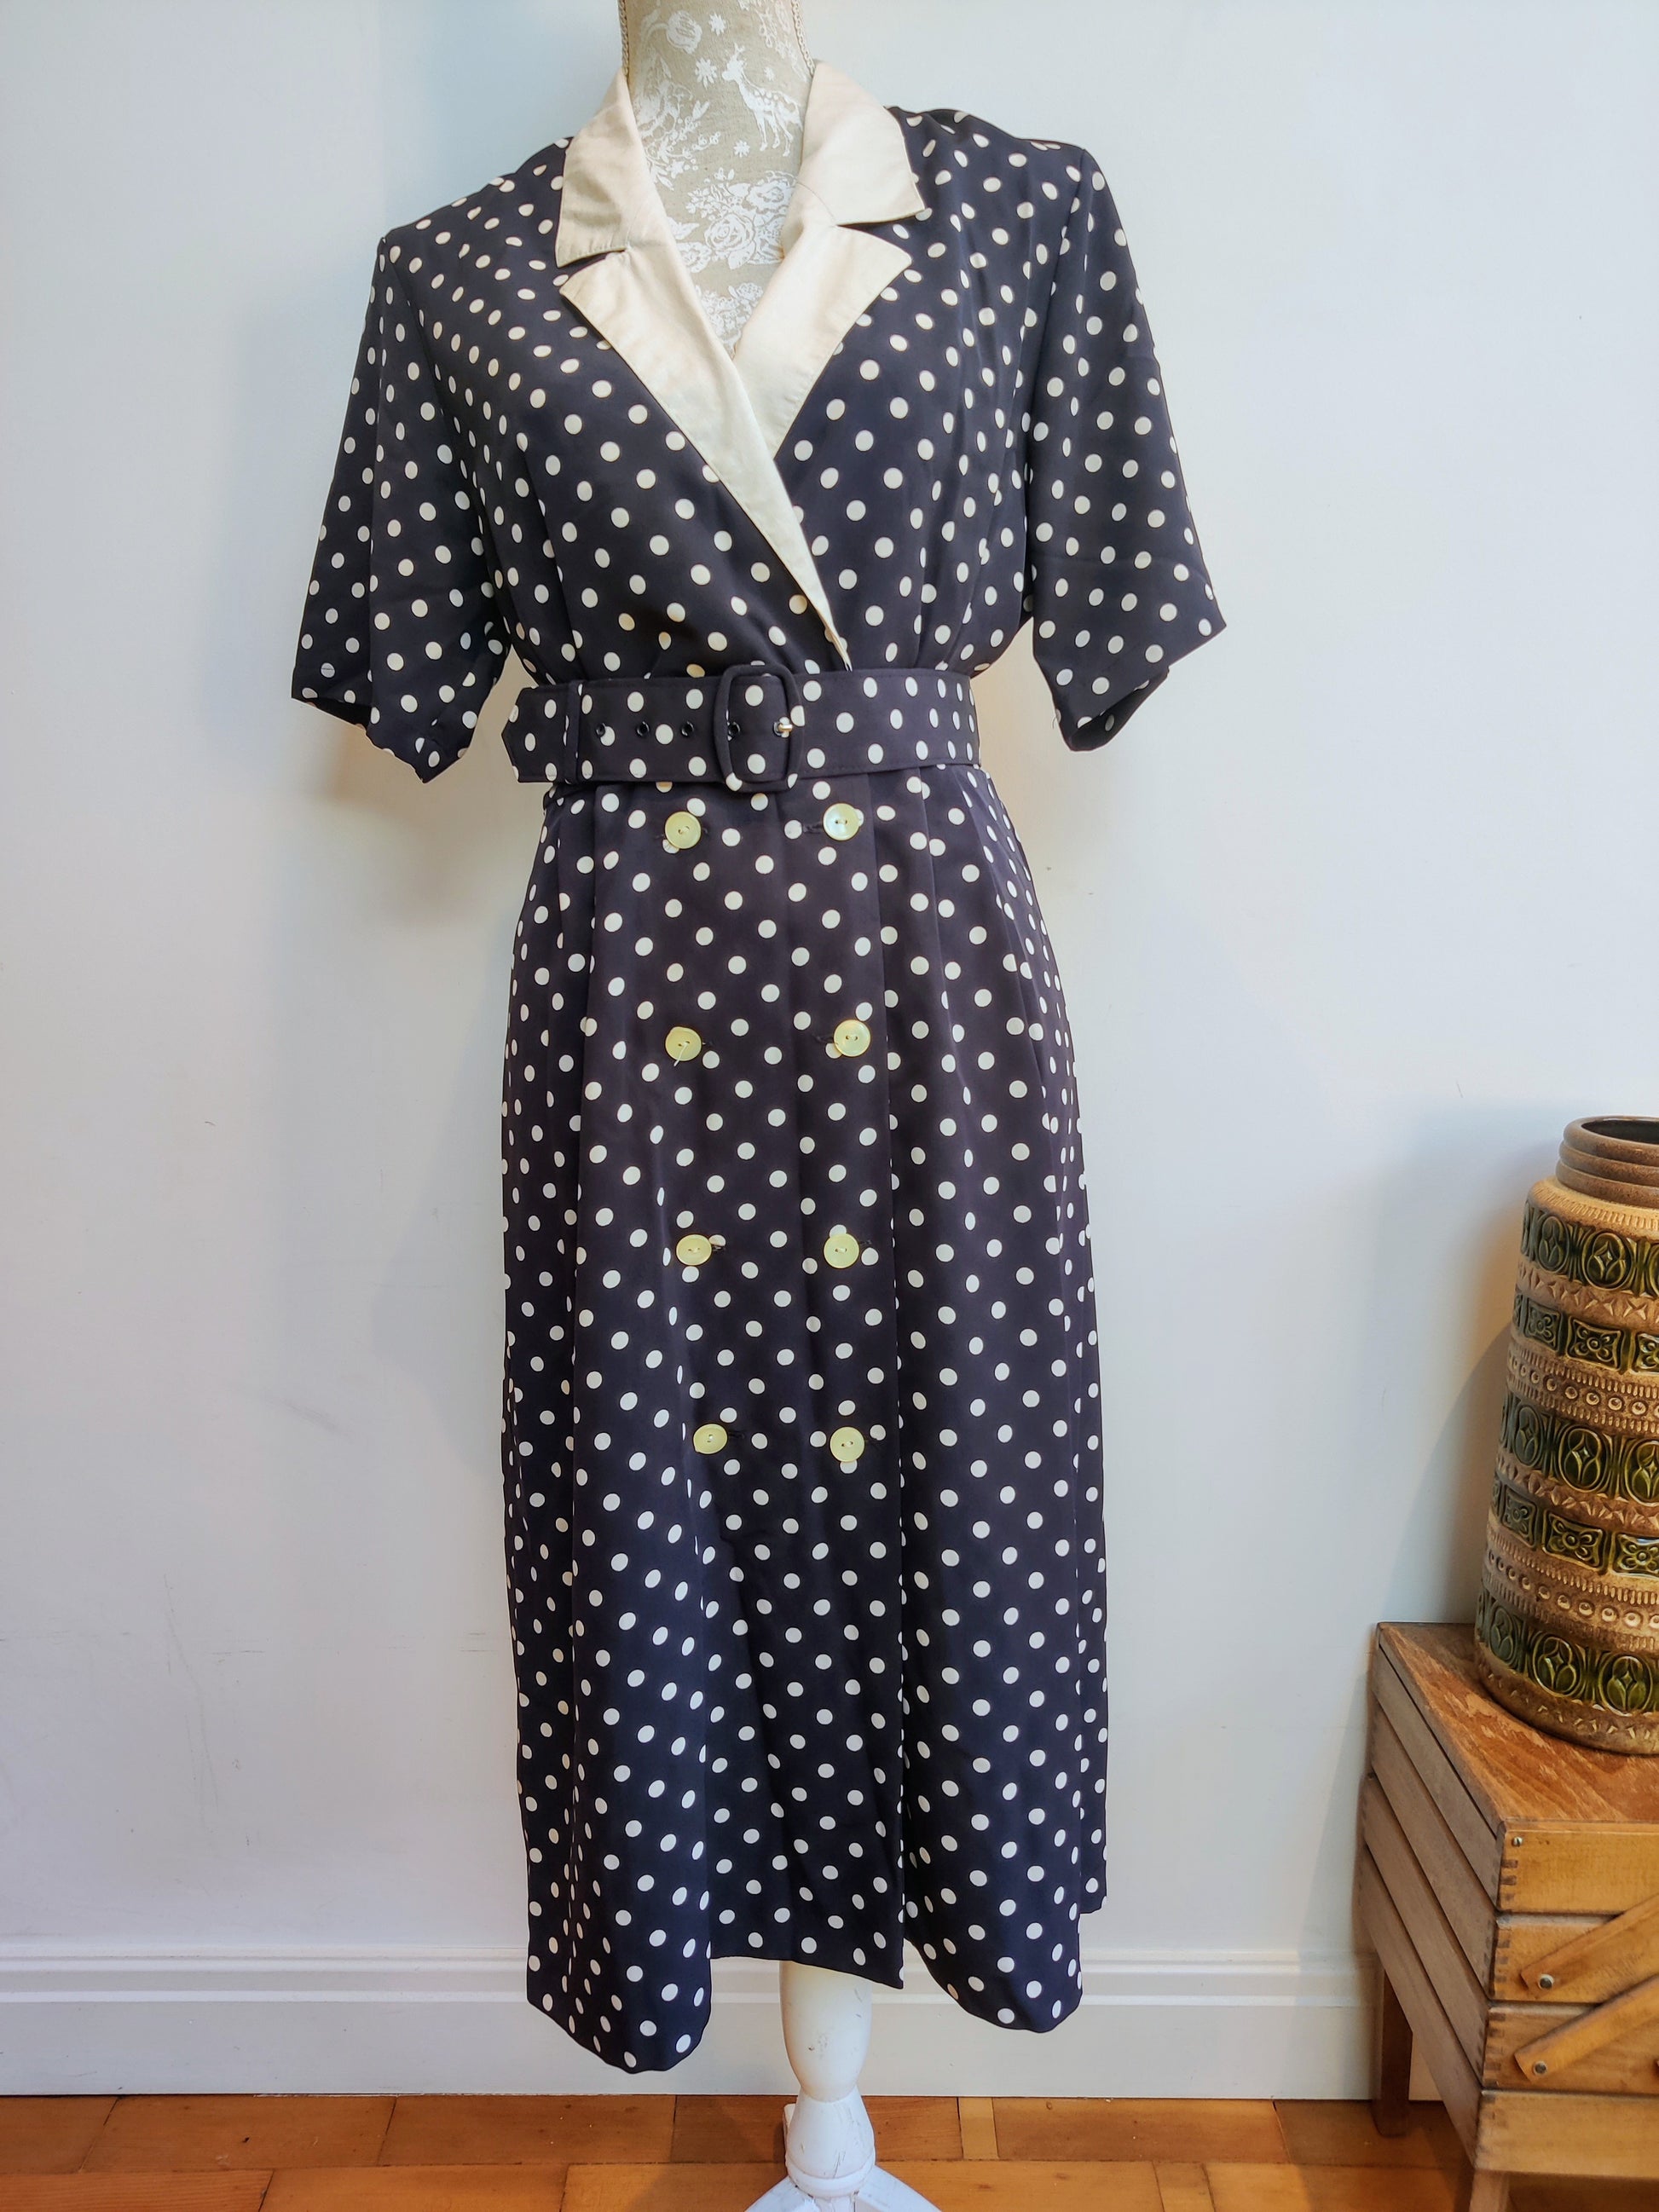 Vintage spotty tea dress 